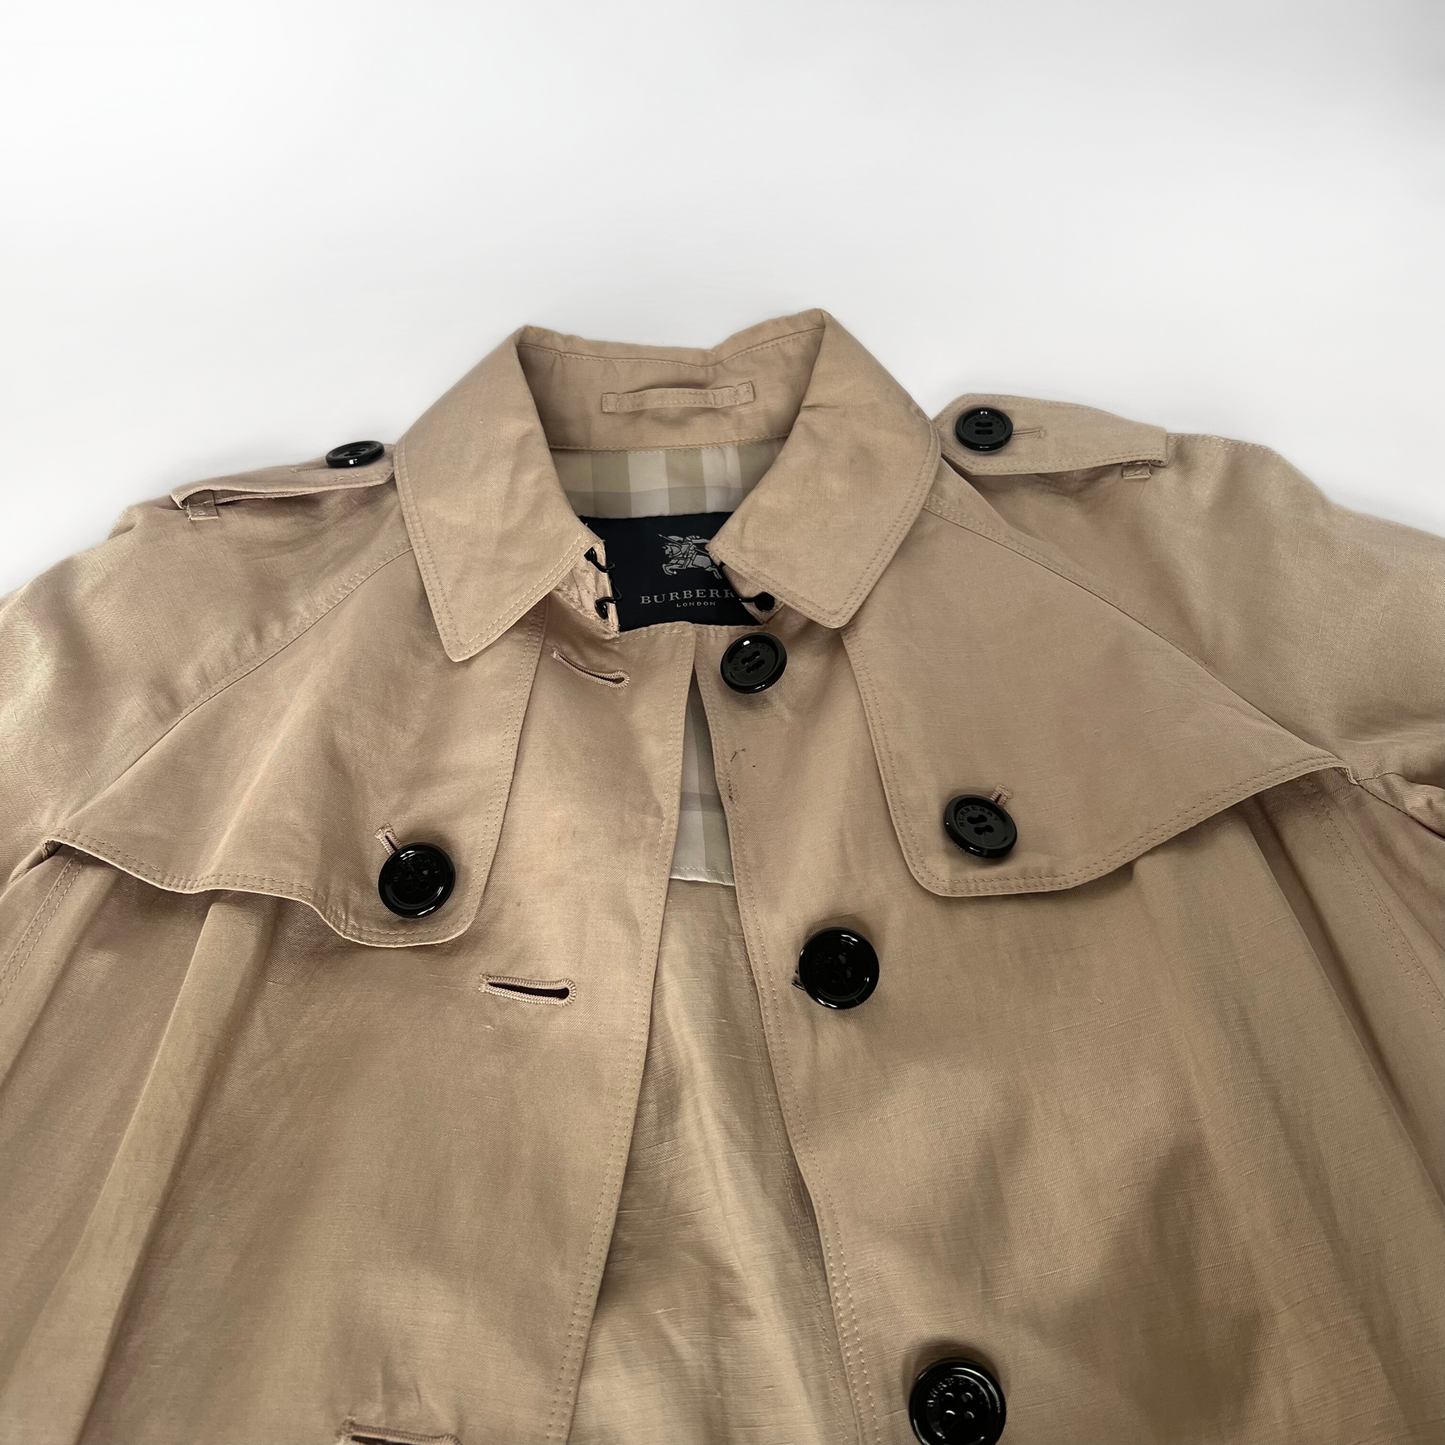 Burberry Burberry Trench Coat Lenn Blend - Jacket - Etoile Luxury Vintage